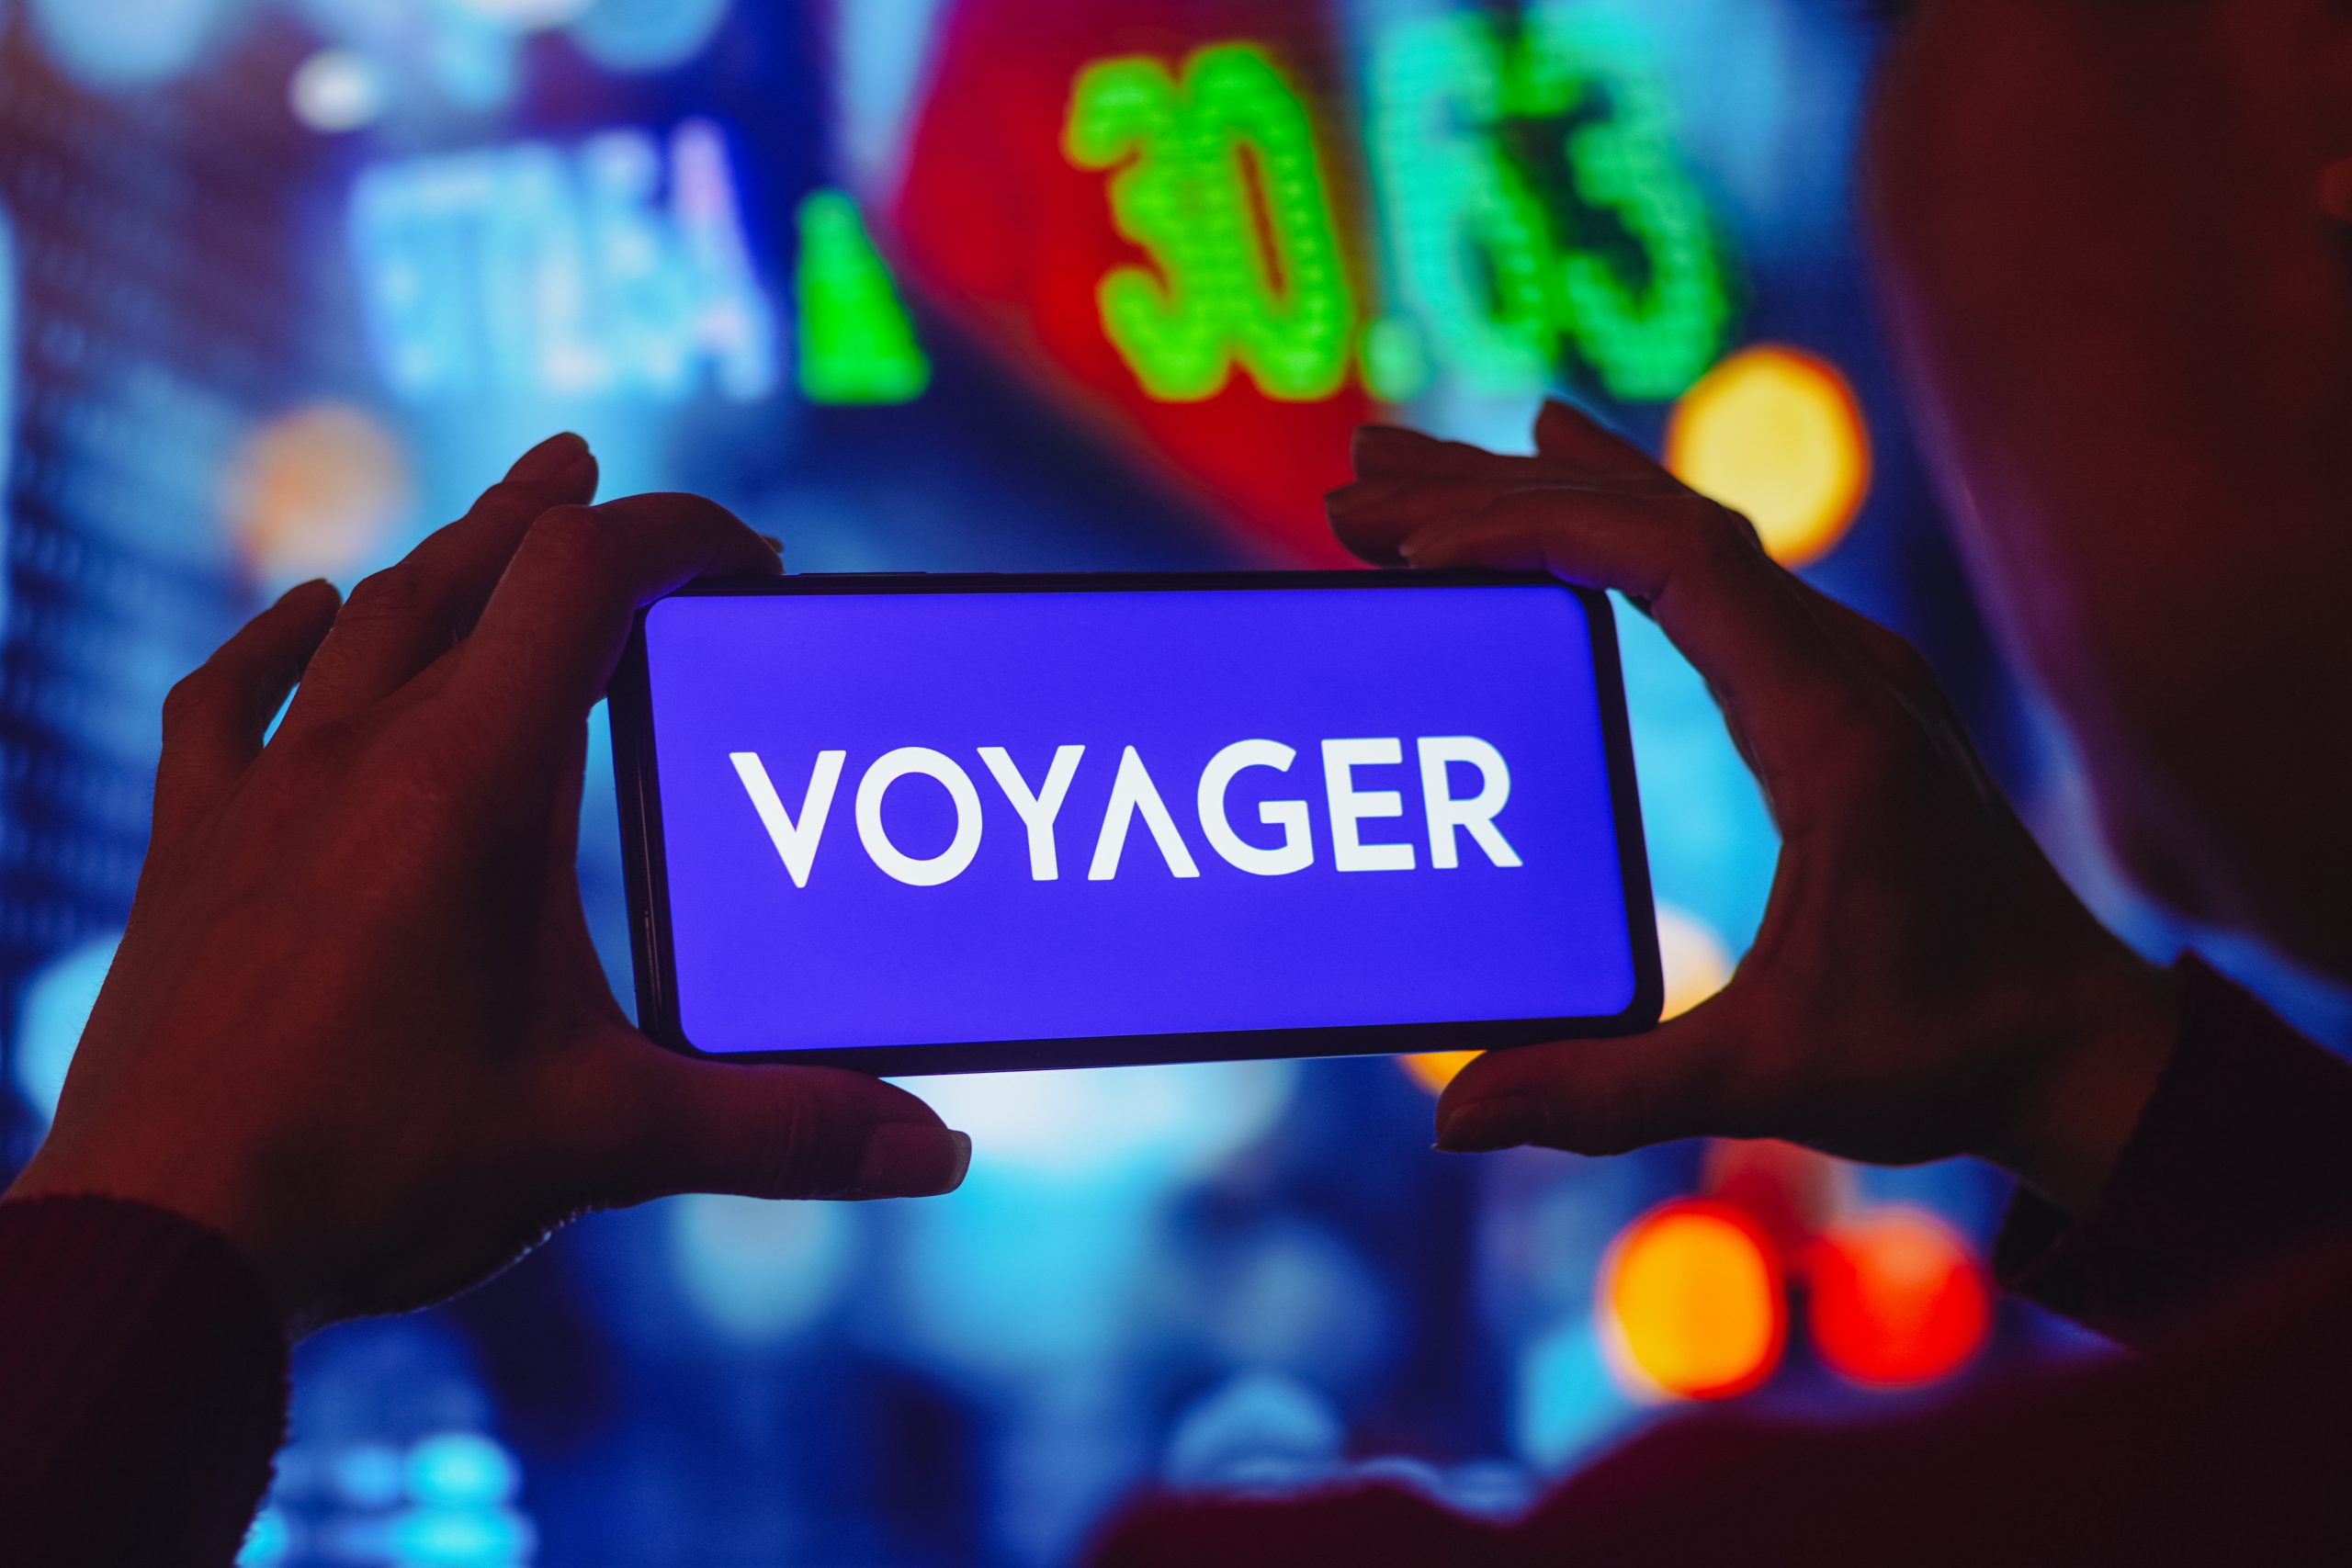 FTX US Wins Voyager Digital Assets Auction
